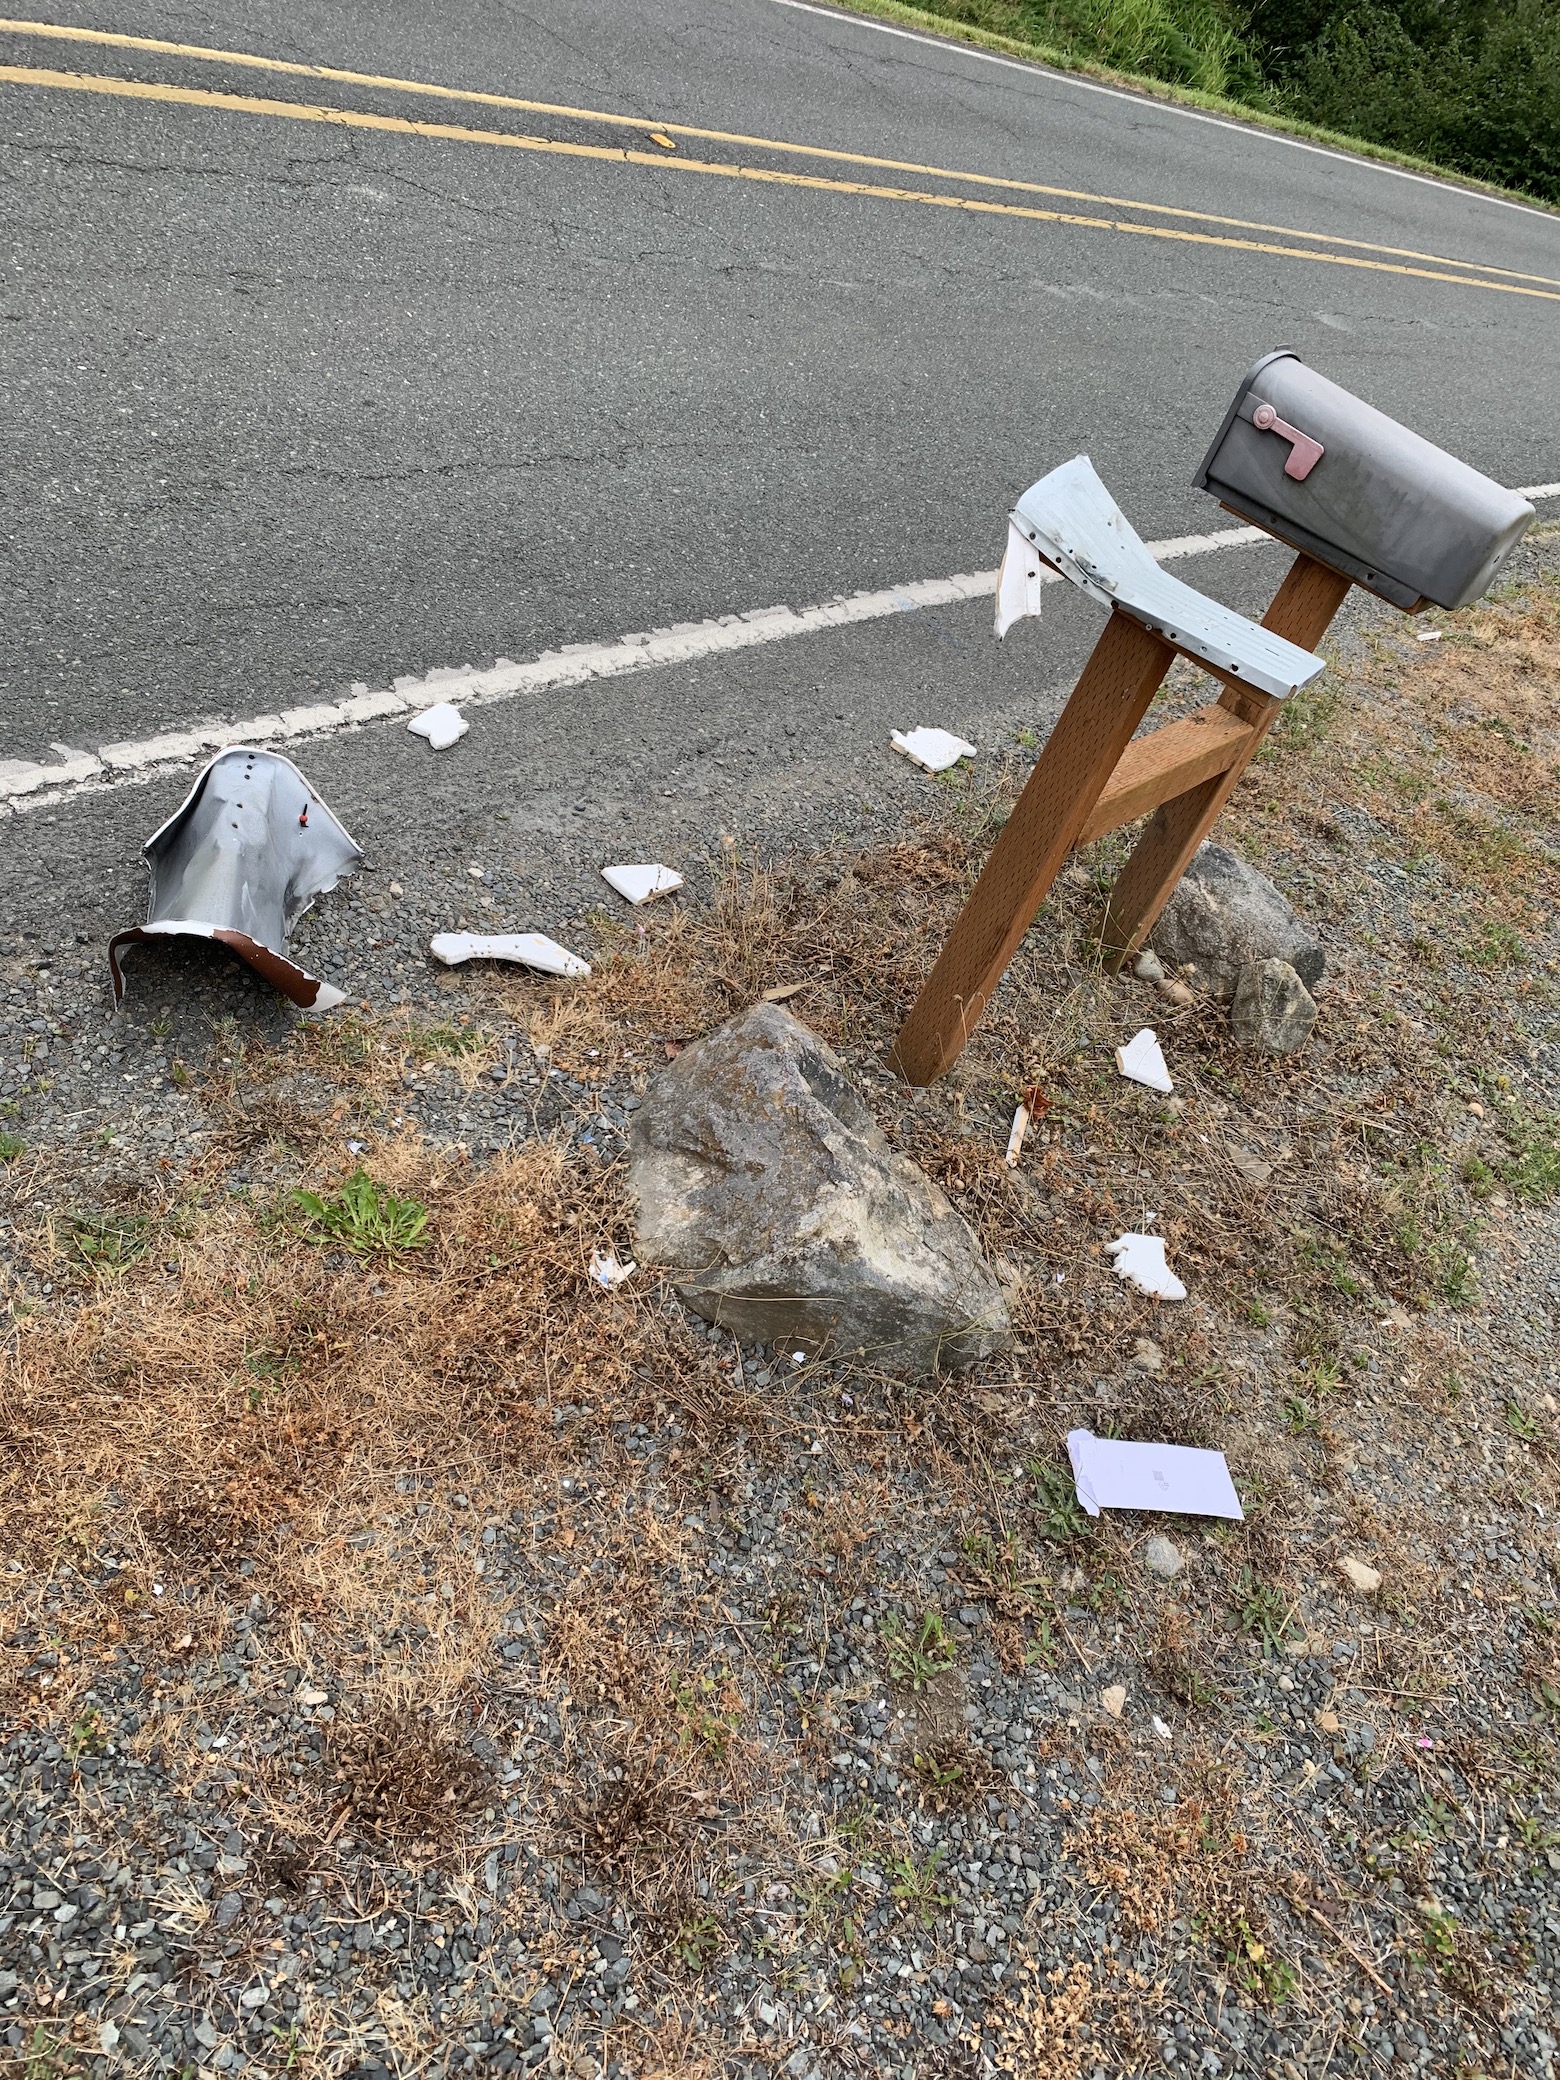 Mailbox blown up